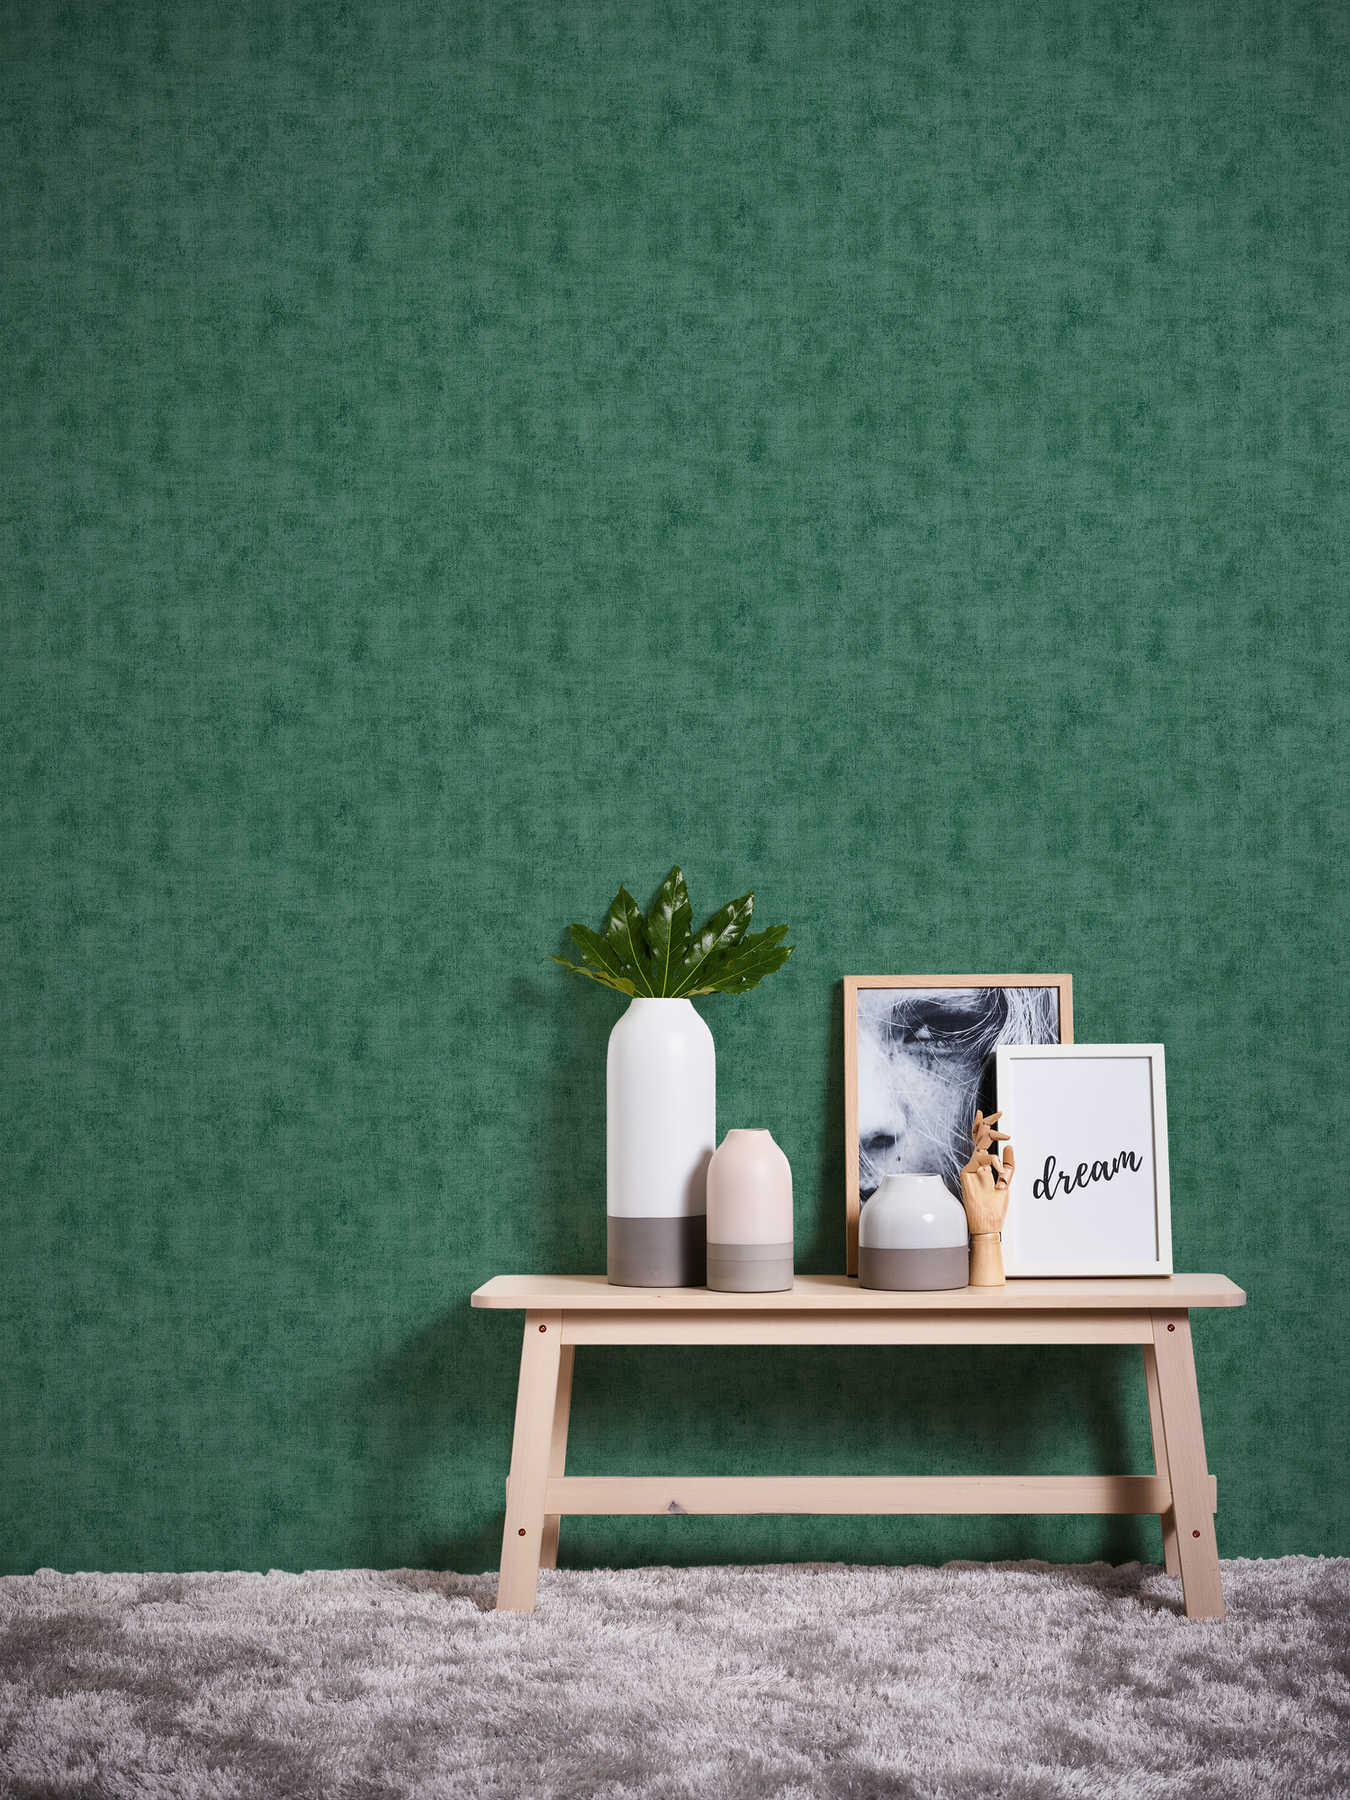             Plain wallpaper with mottled texture look - green
        